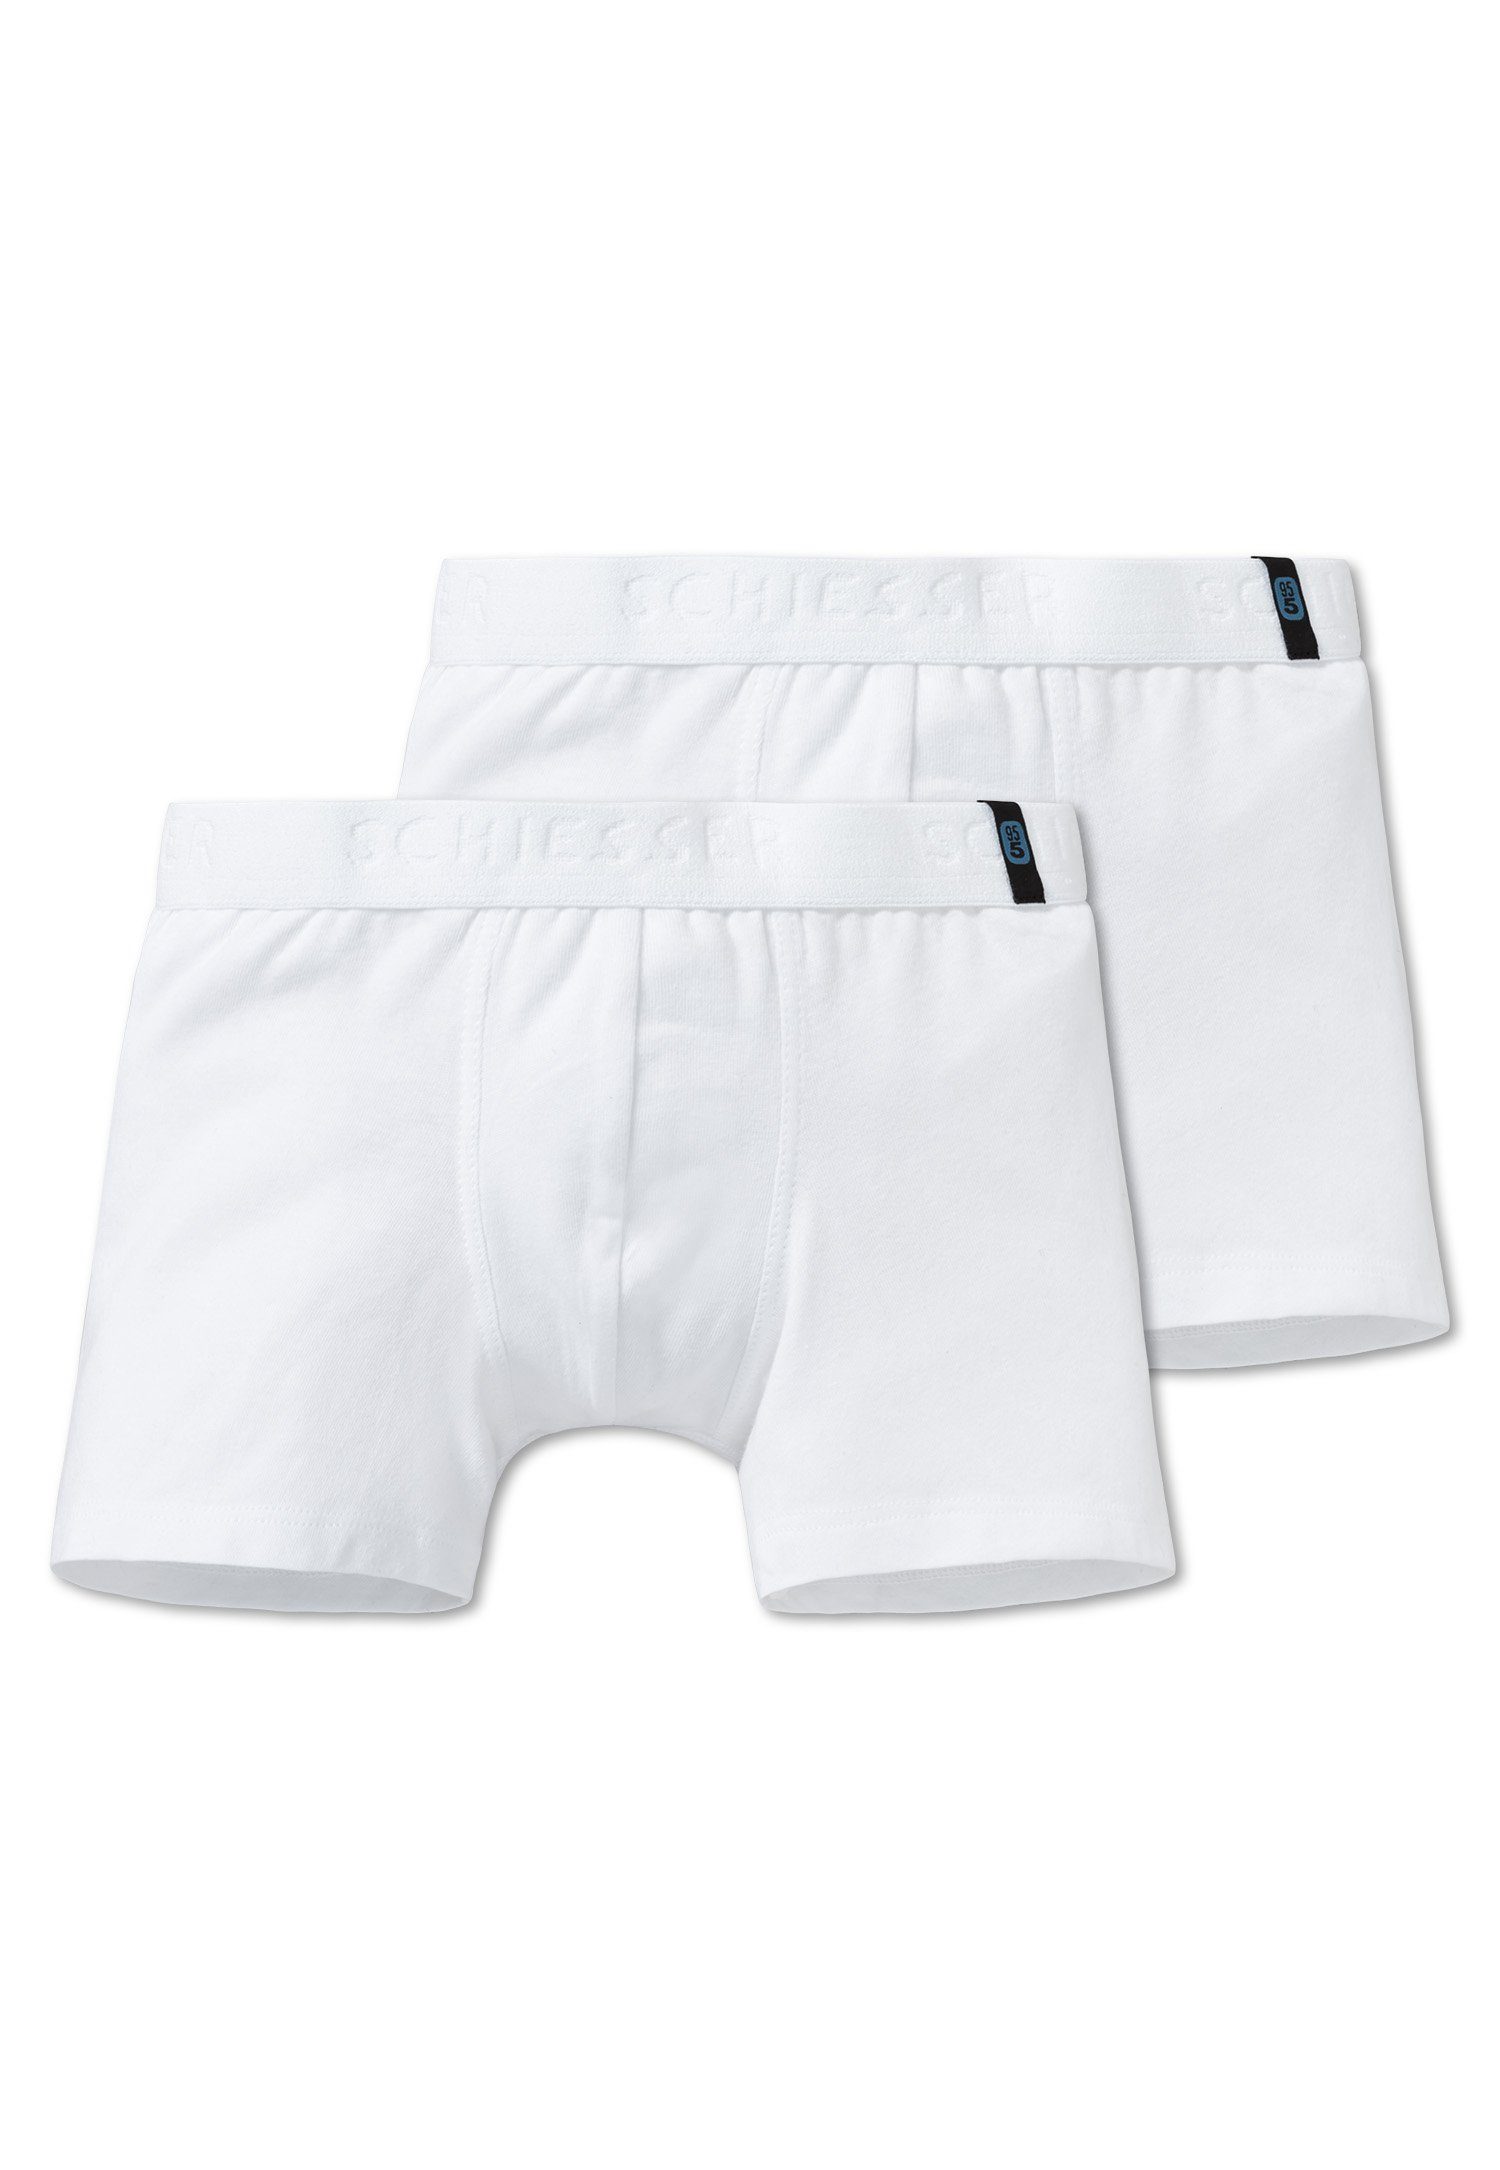 Unterhosen, Schiesser Cotton 2-St., Set) (Set, Cotton Pants, 2er weiss Set 95/5 Unterhosen, 95/5 Hip-Shorts Jungen Boxershorts